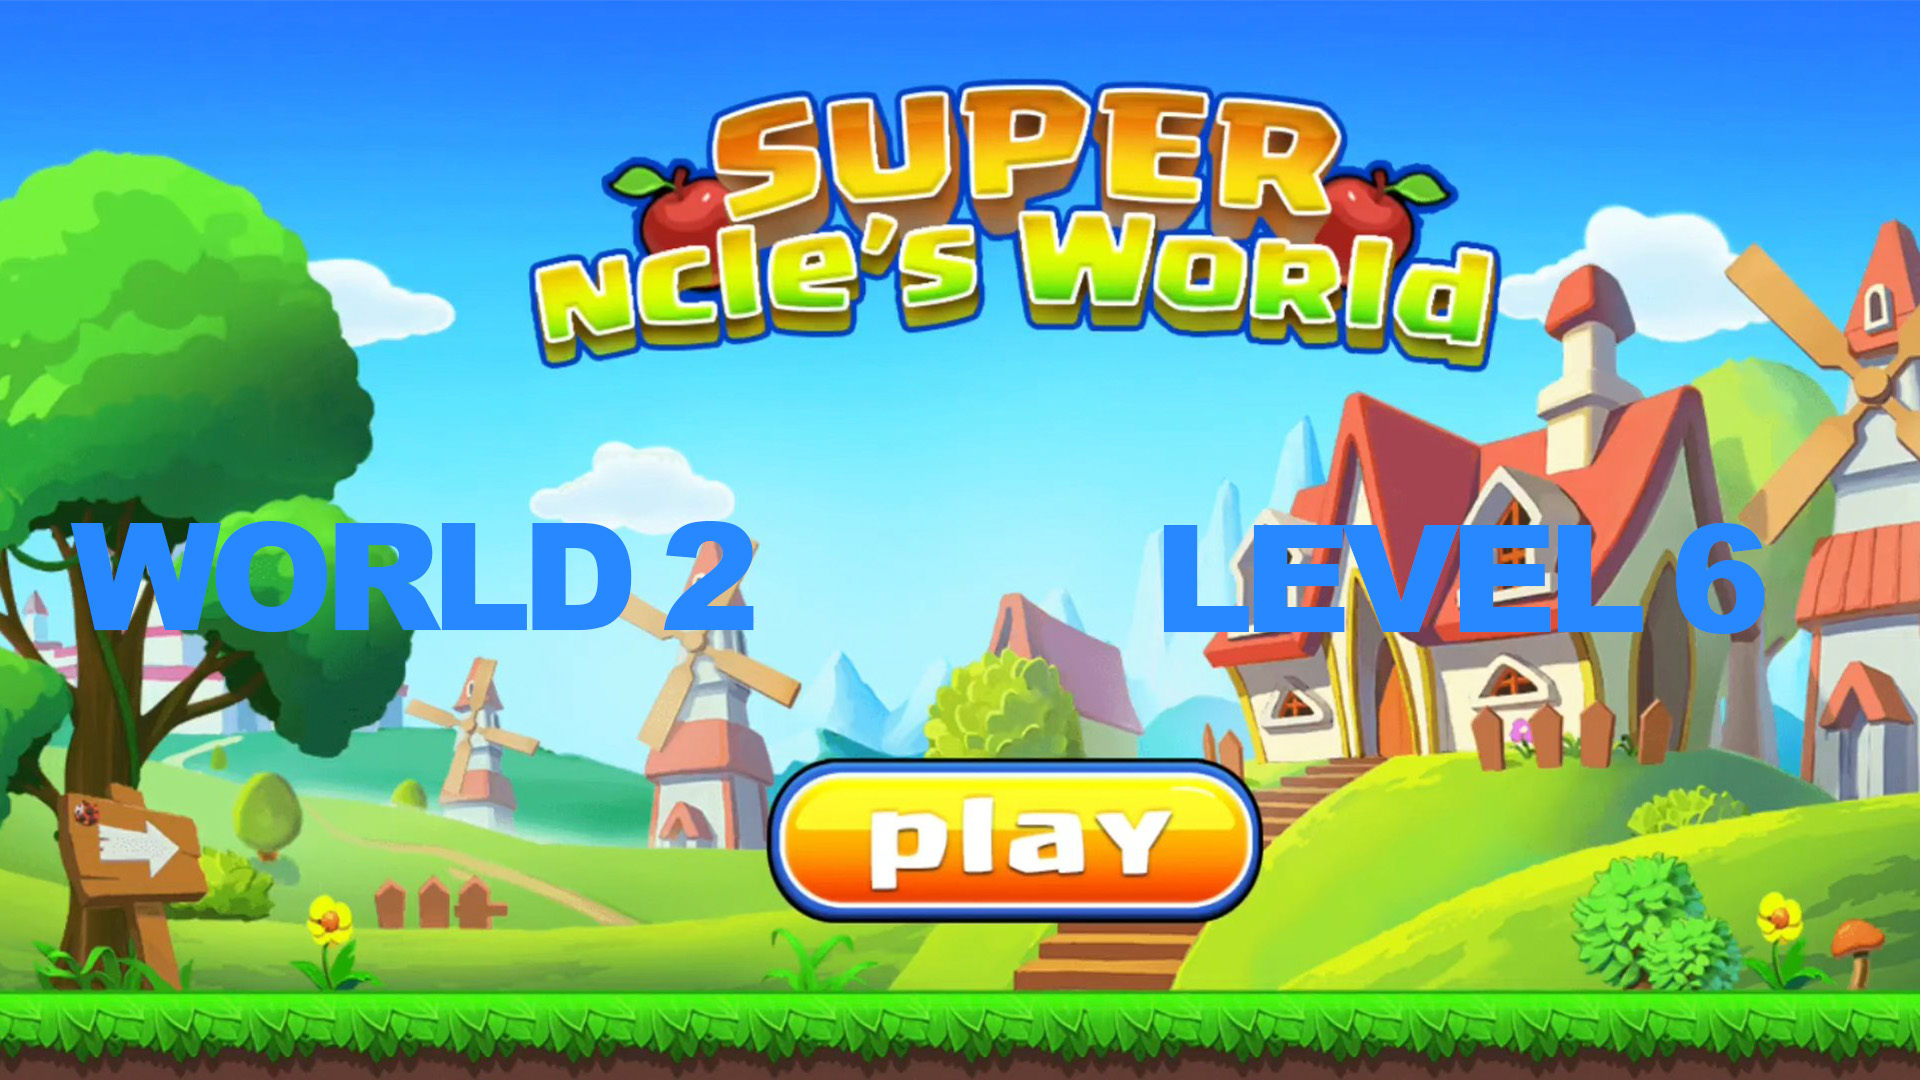 Super ncle's  World 2. levei 6.